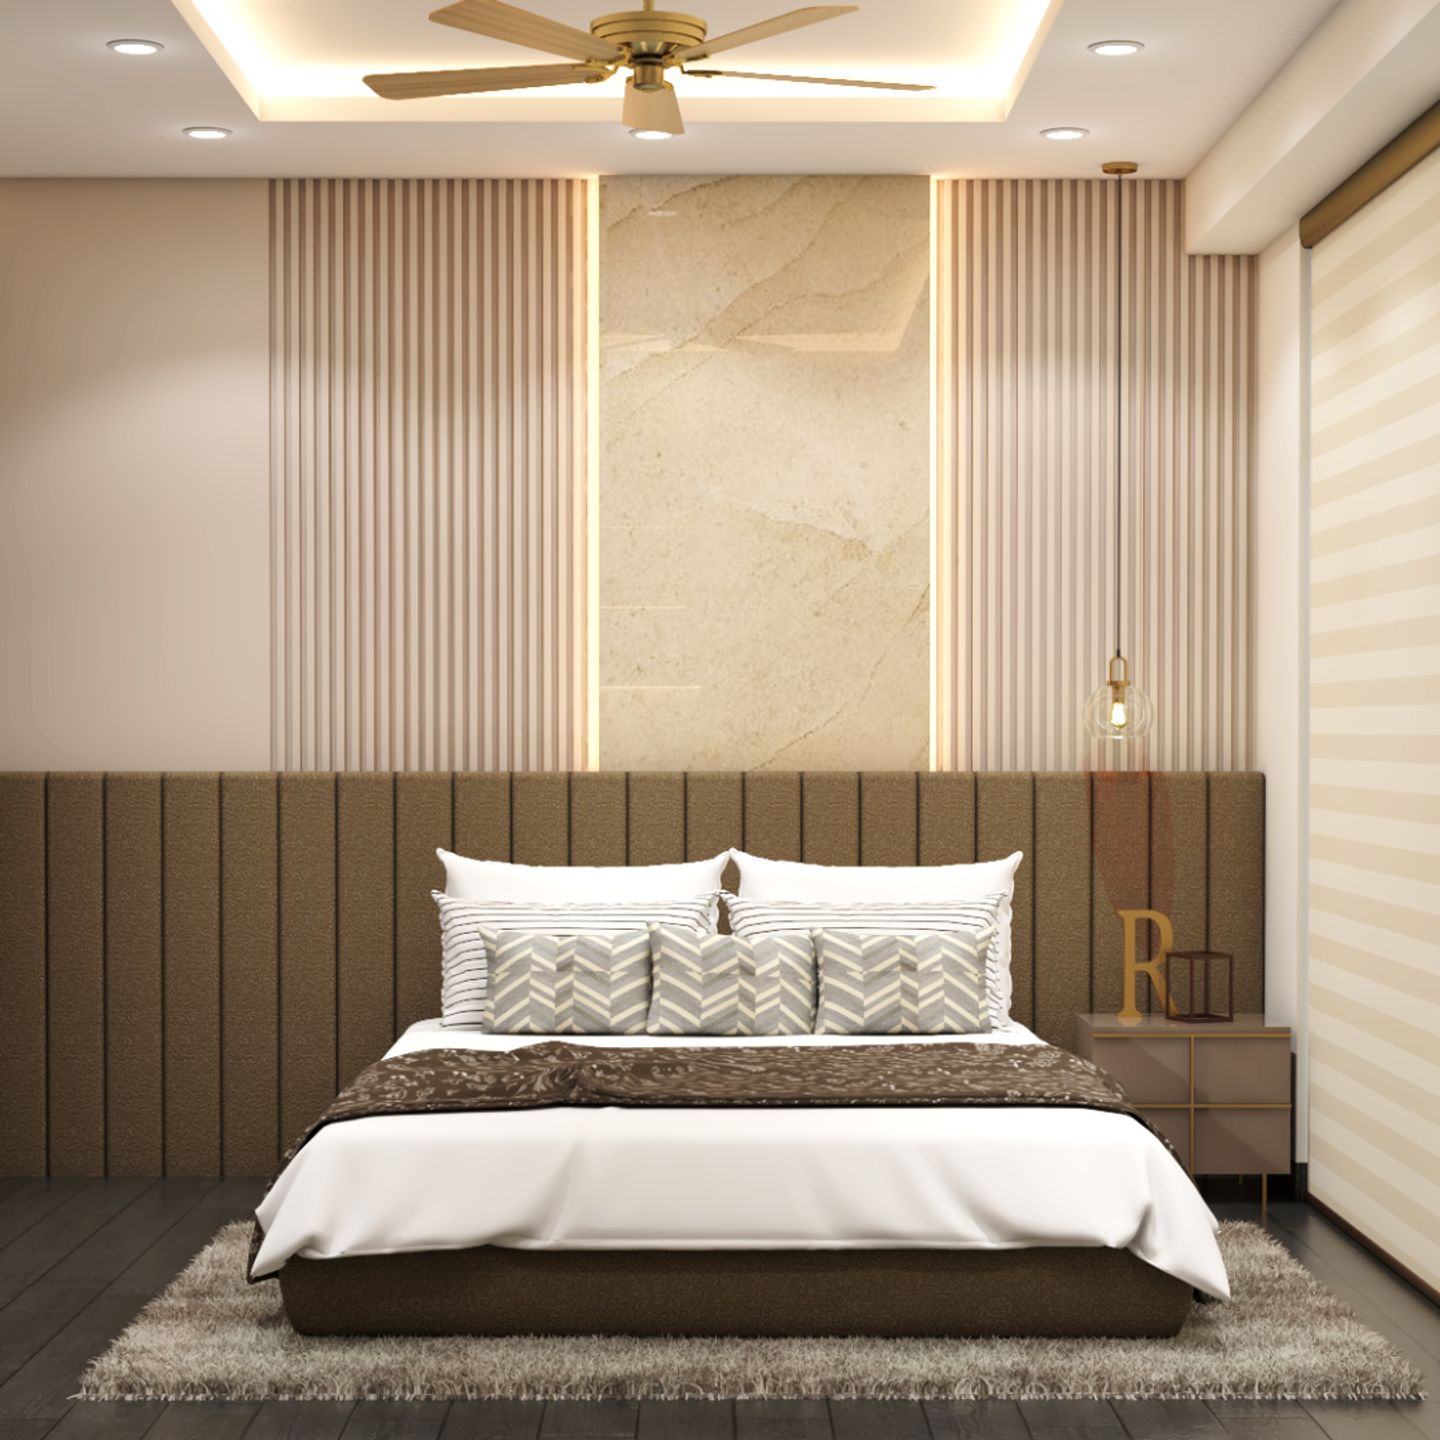 Bedroom Design With Photo Frames - Livspace